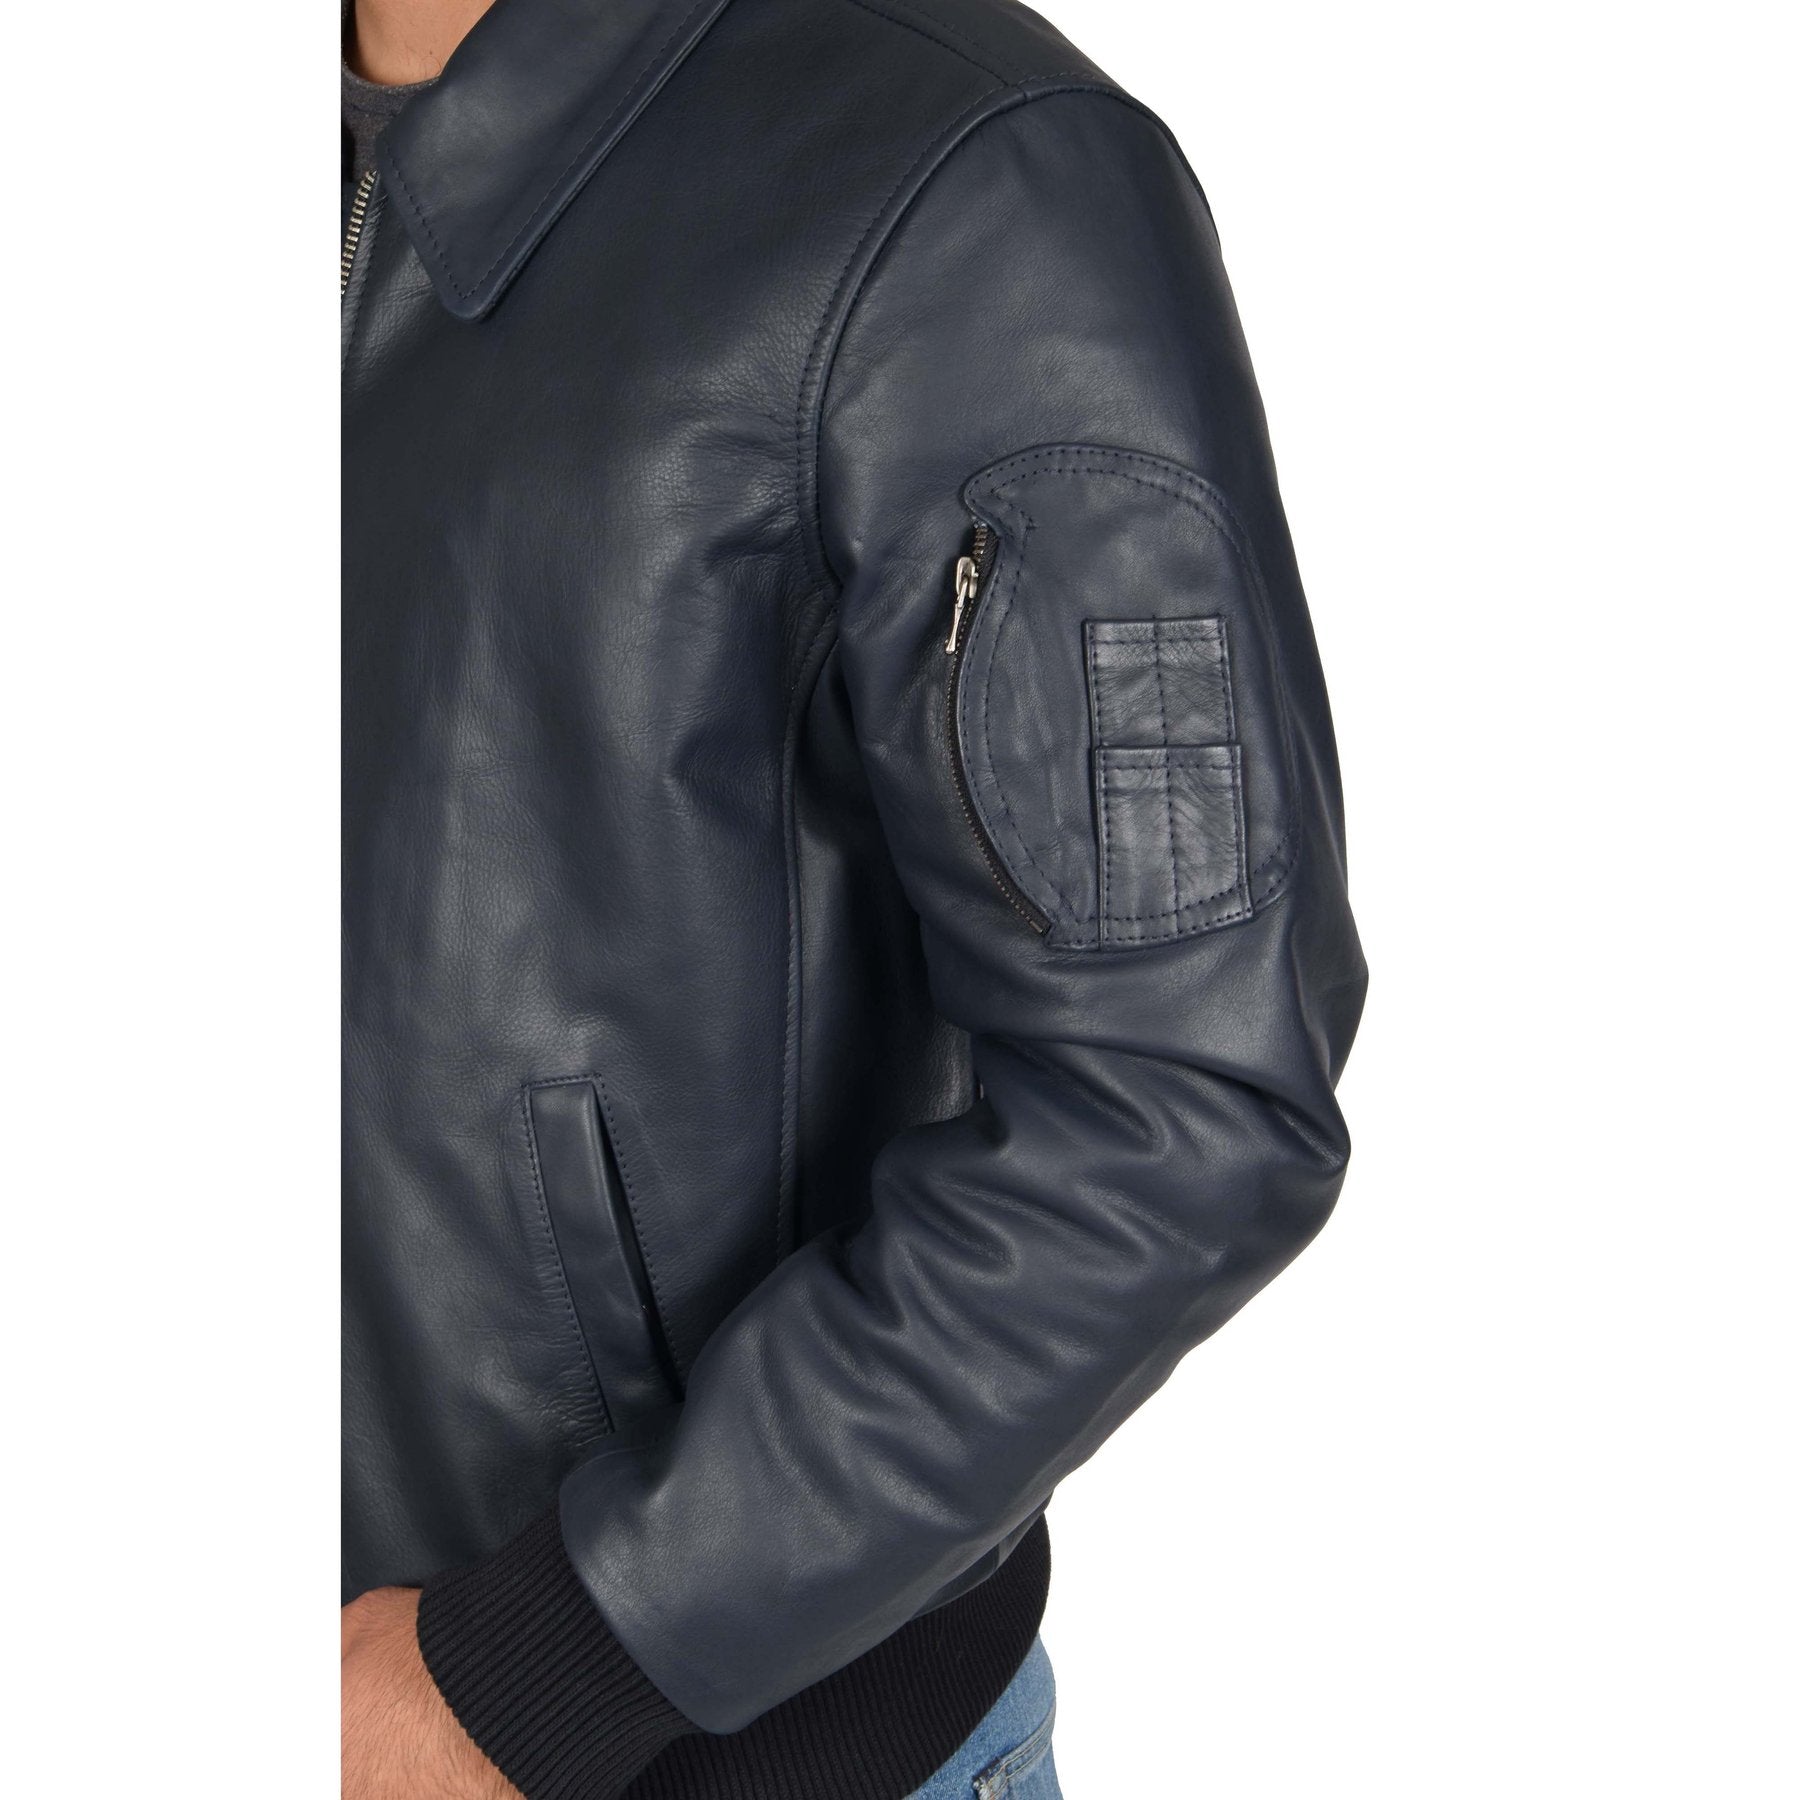 Spine Spark Men's Navy Blue Bomber Pilot Style Leather Jacket